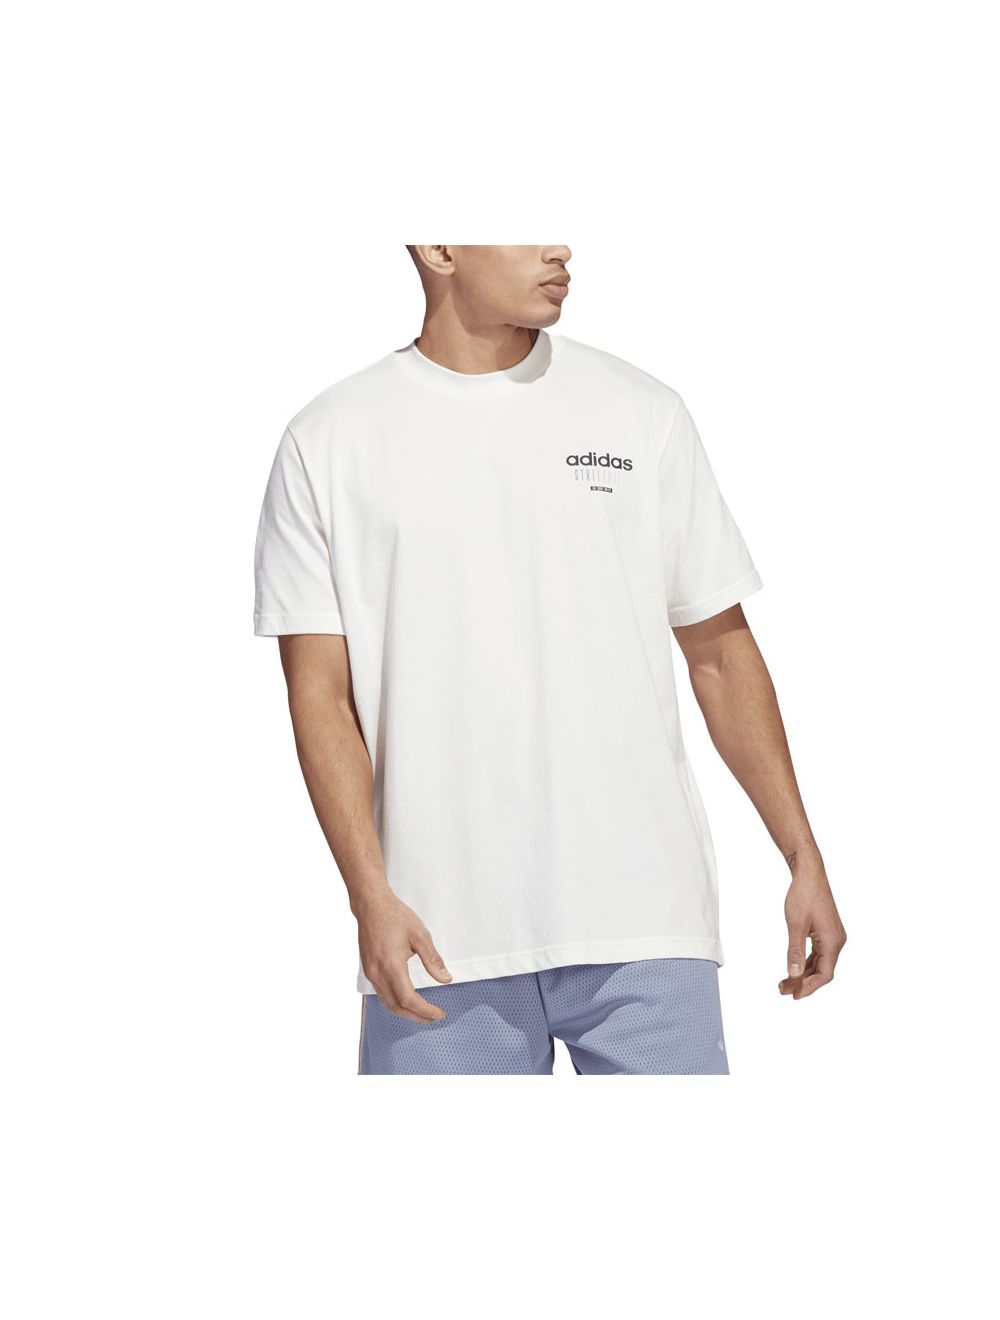 adidas Originals Basketball Streetball T-shirt Mens White